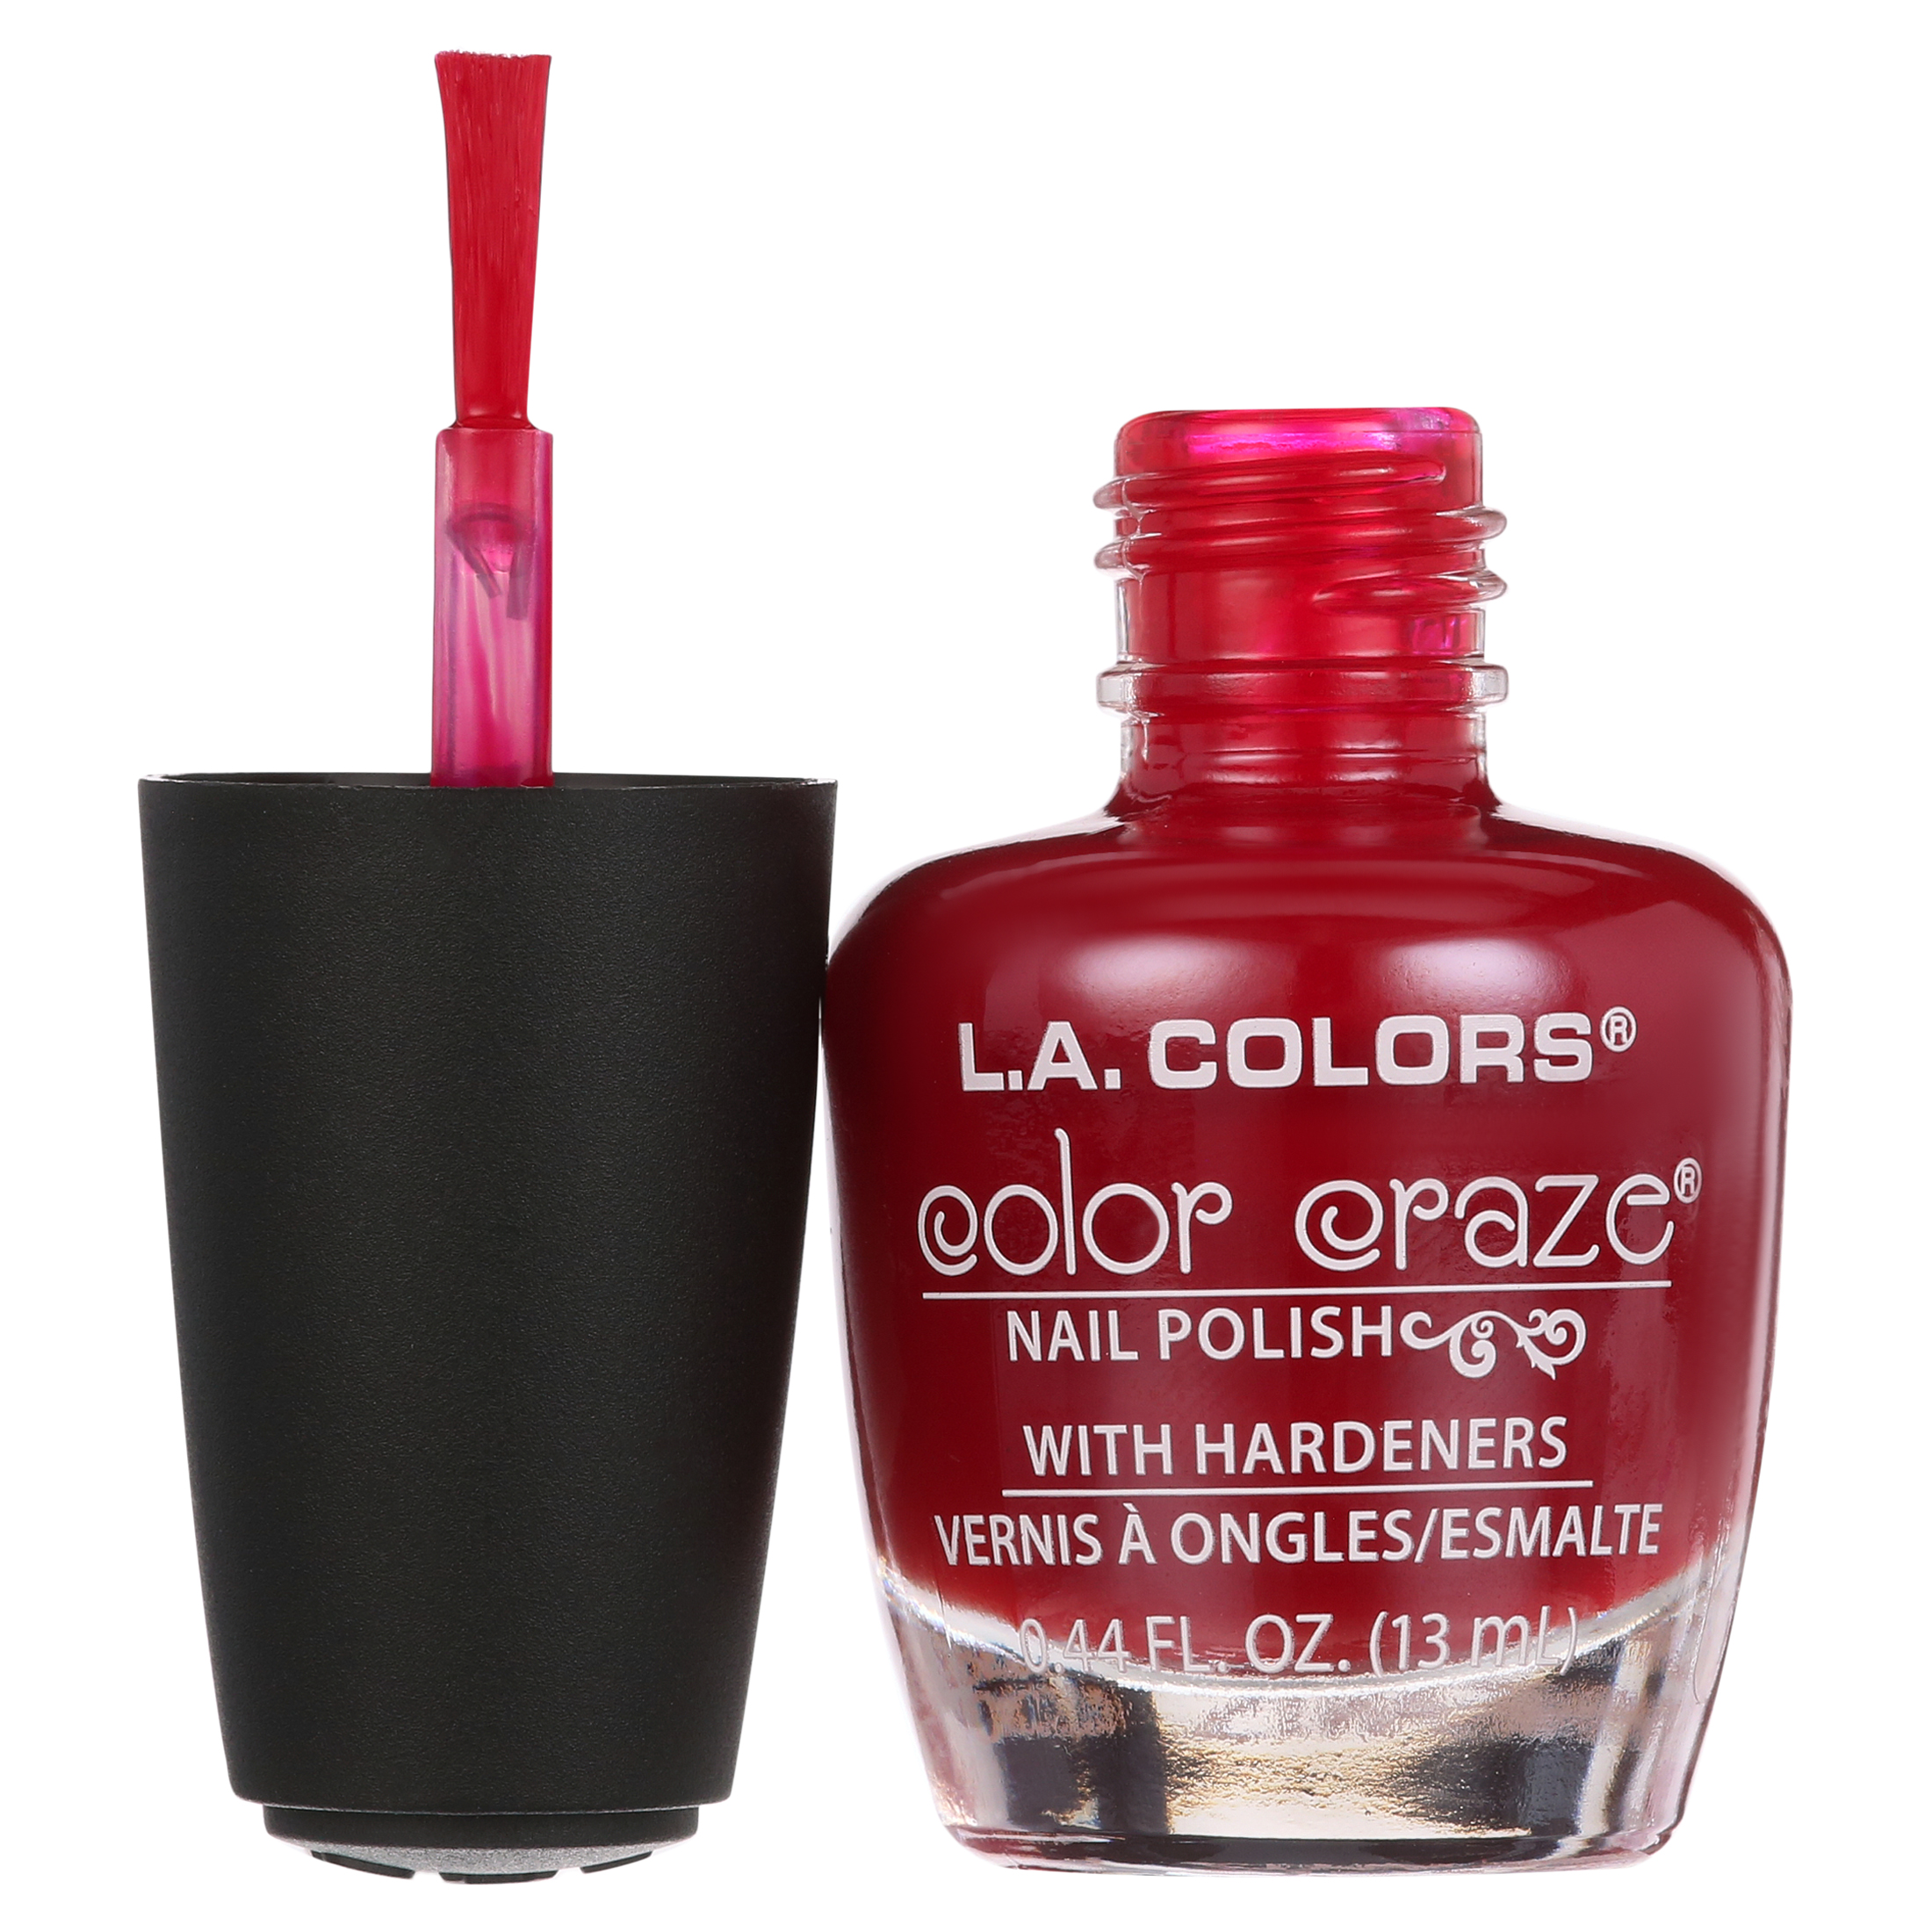 L.A. COLORS Color Craze Nail Polish, Hot Blooded, 0.44 fl oz - image 5 of 8